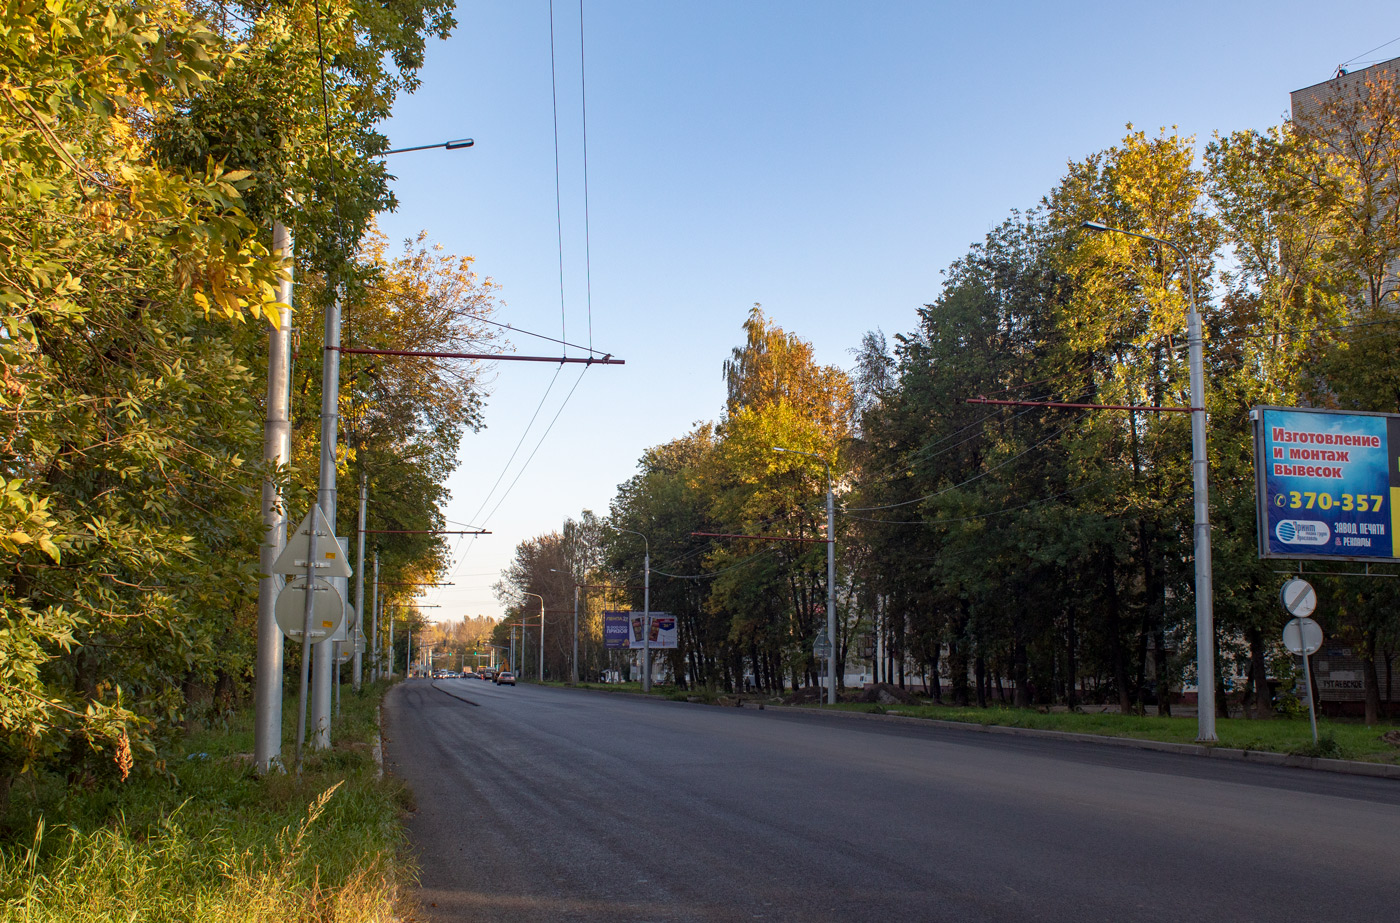 Yaroslavl — Reconstruction of tutaevsky road 2019-2020; Yaroslavl — Trolleybus lines